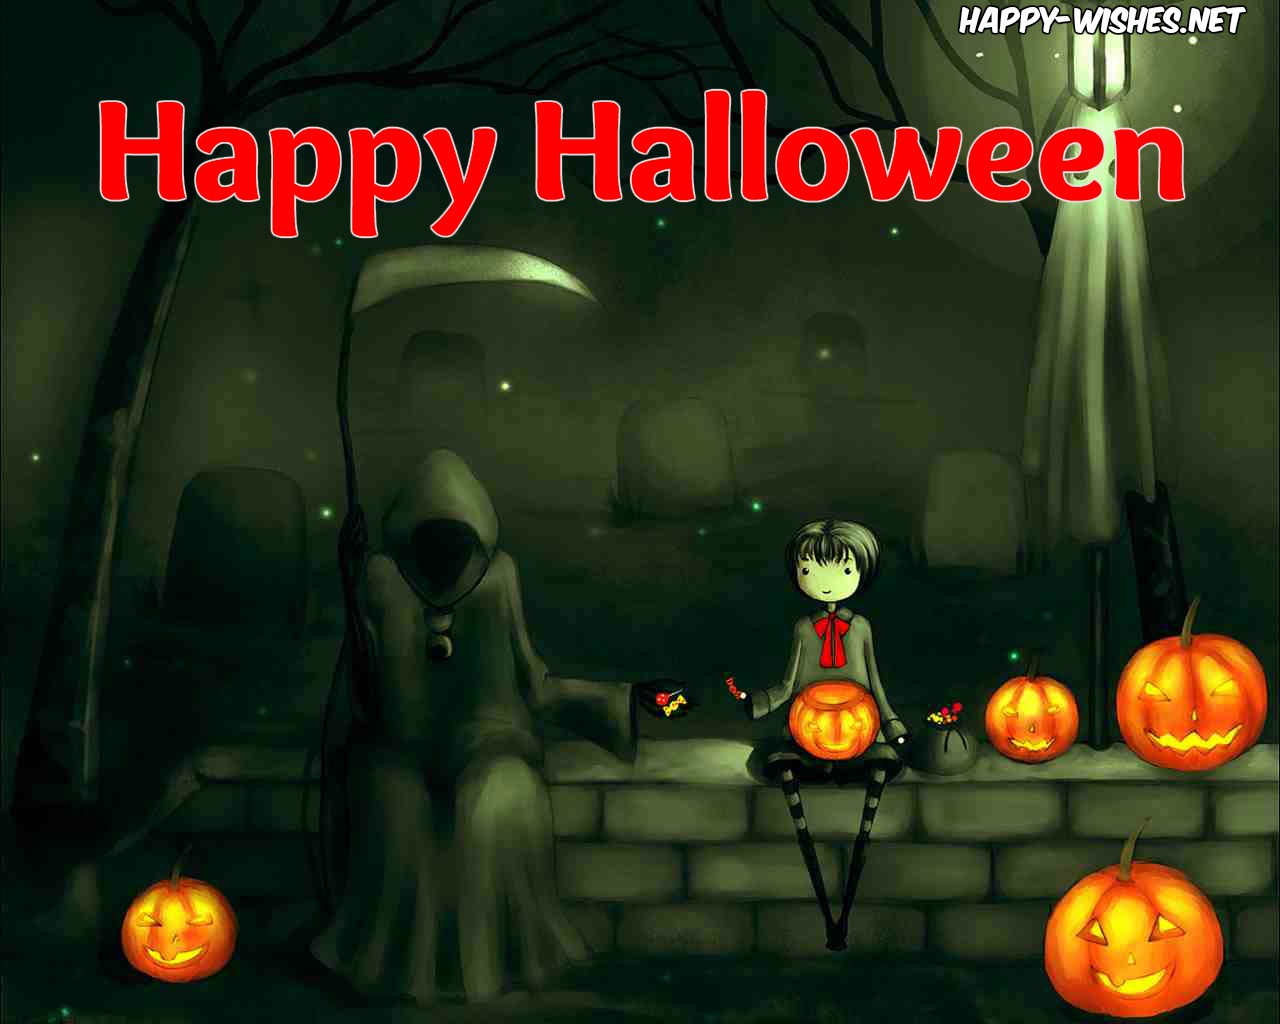 Happy Halloween images 